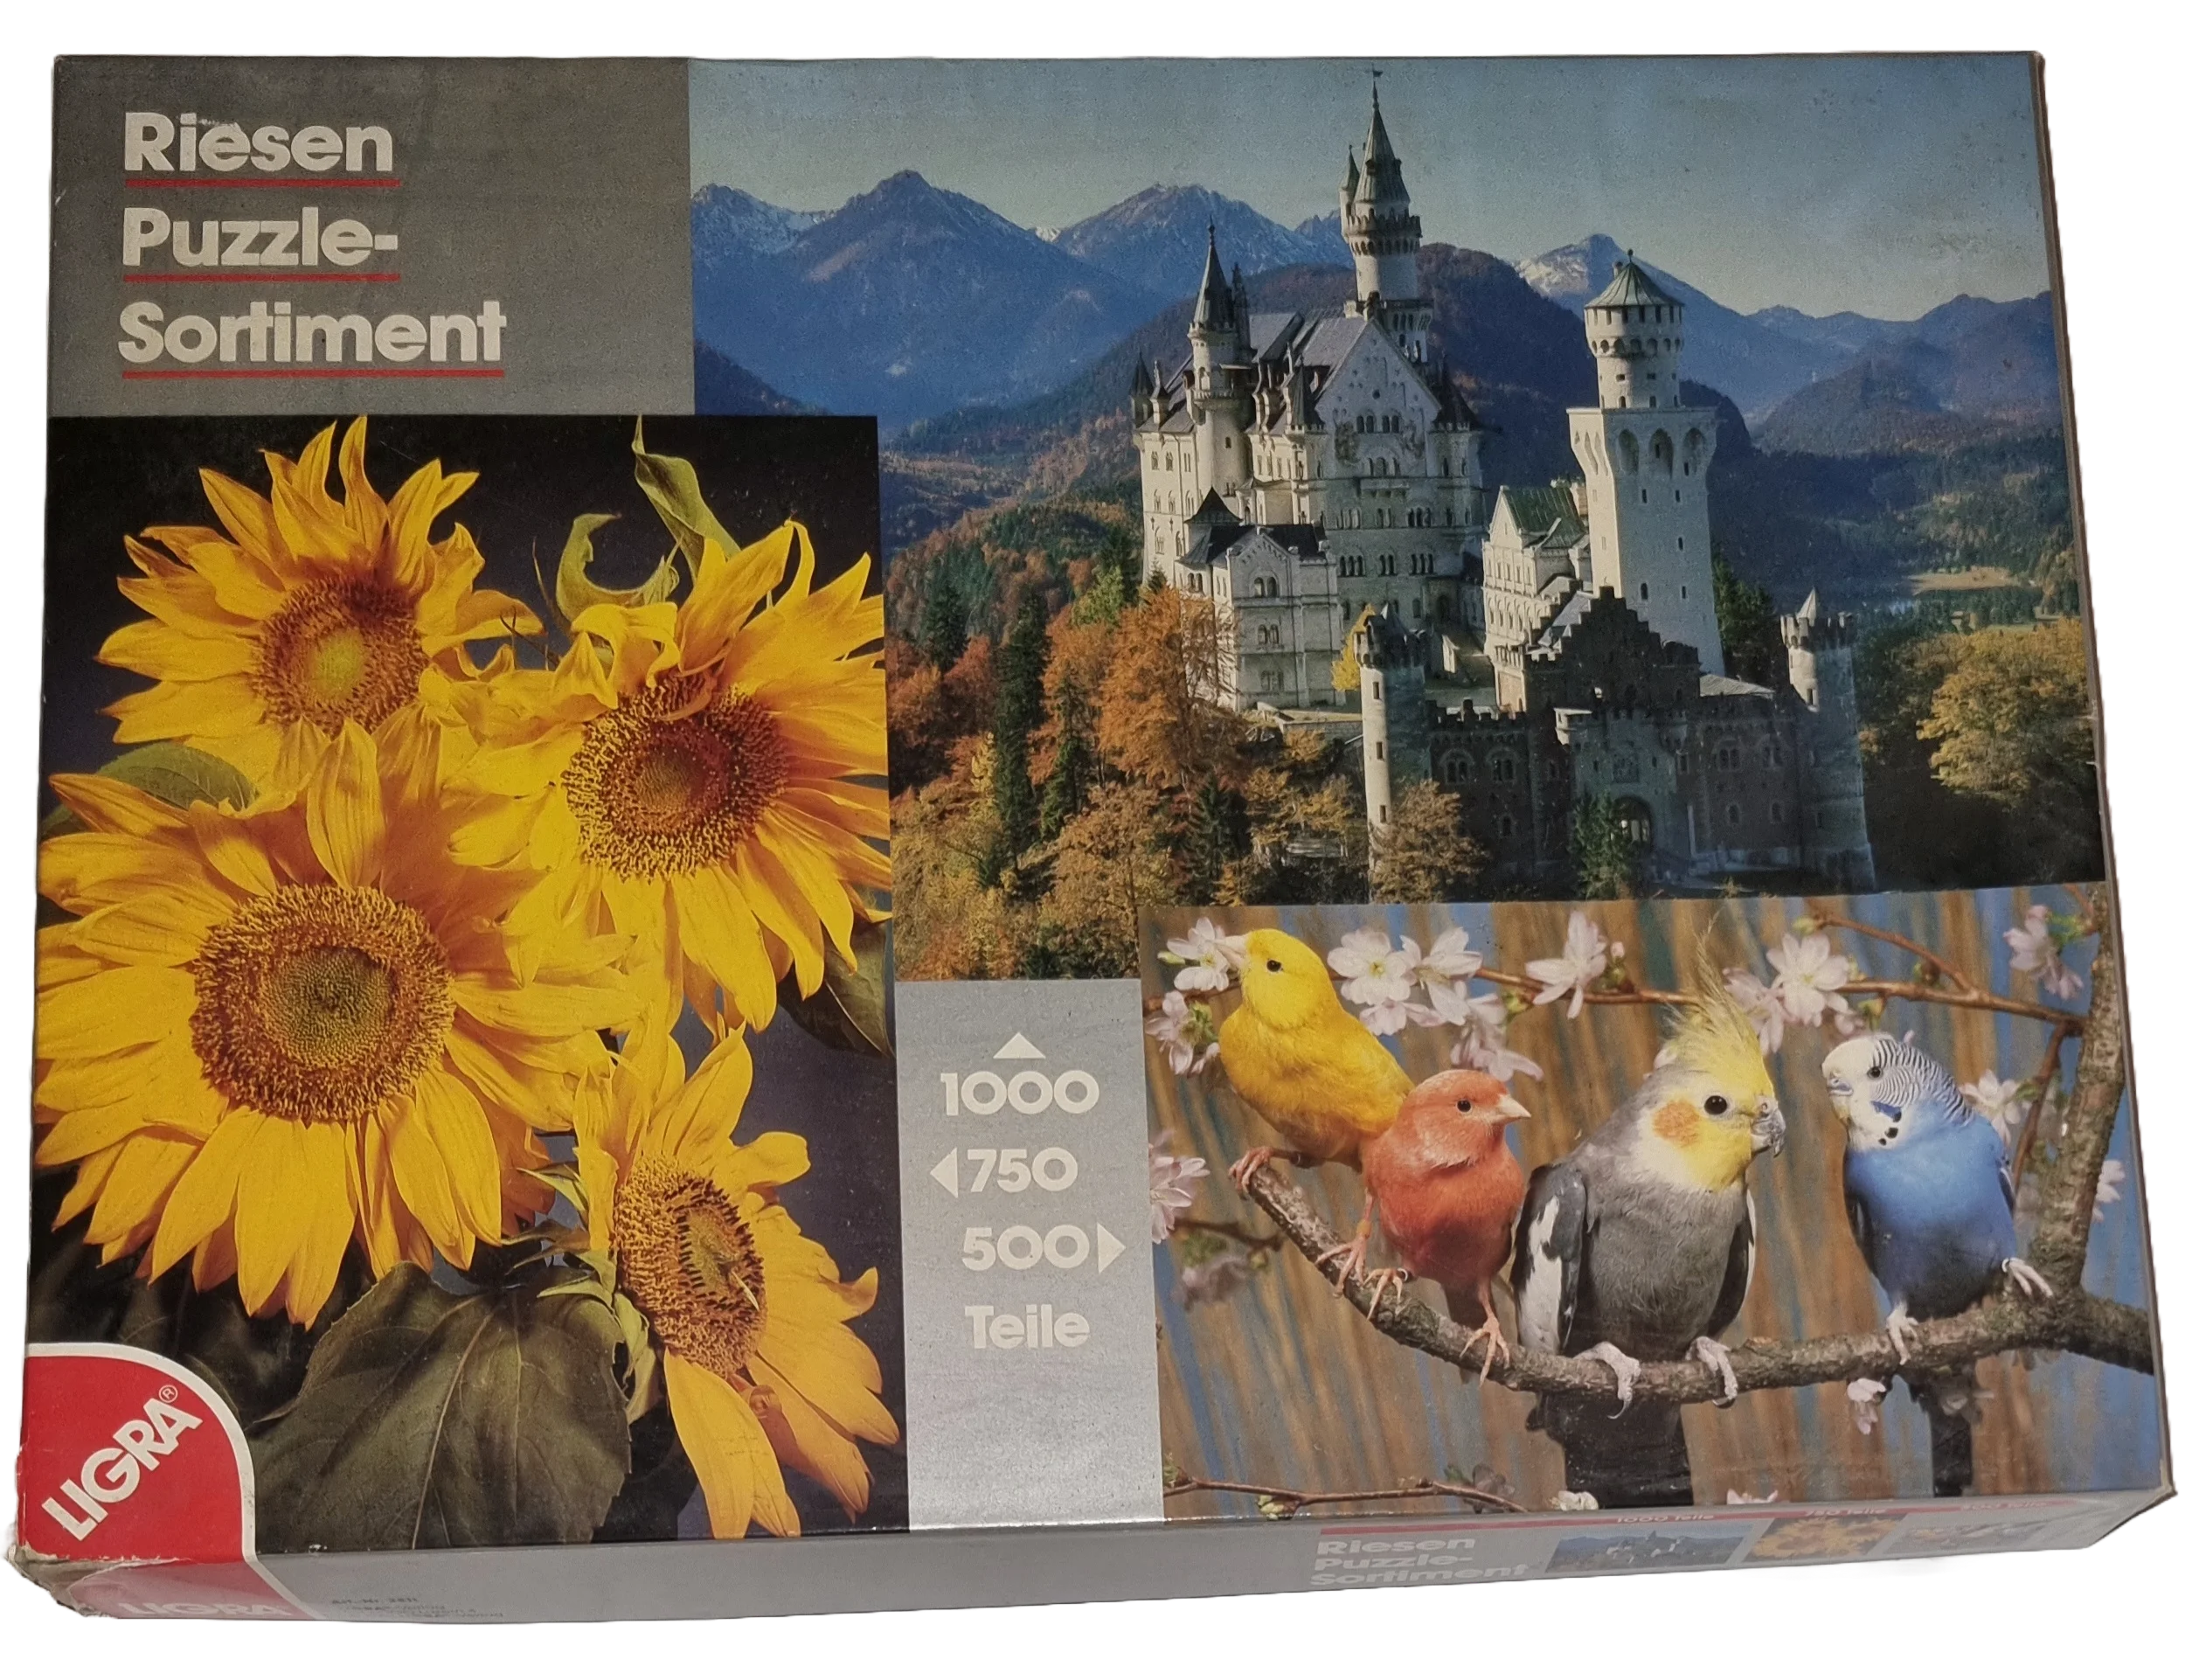 Ligra Riesen Puzzle-Sortiment 1000 Teile, 750 Teile, 500 Teile